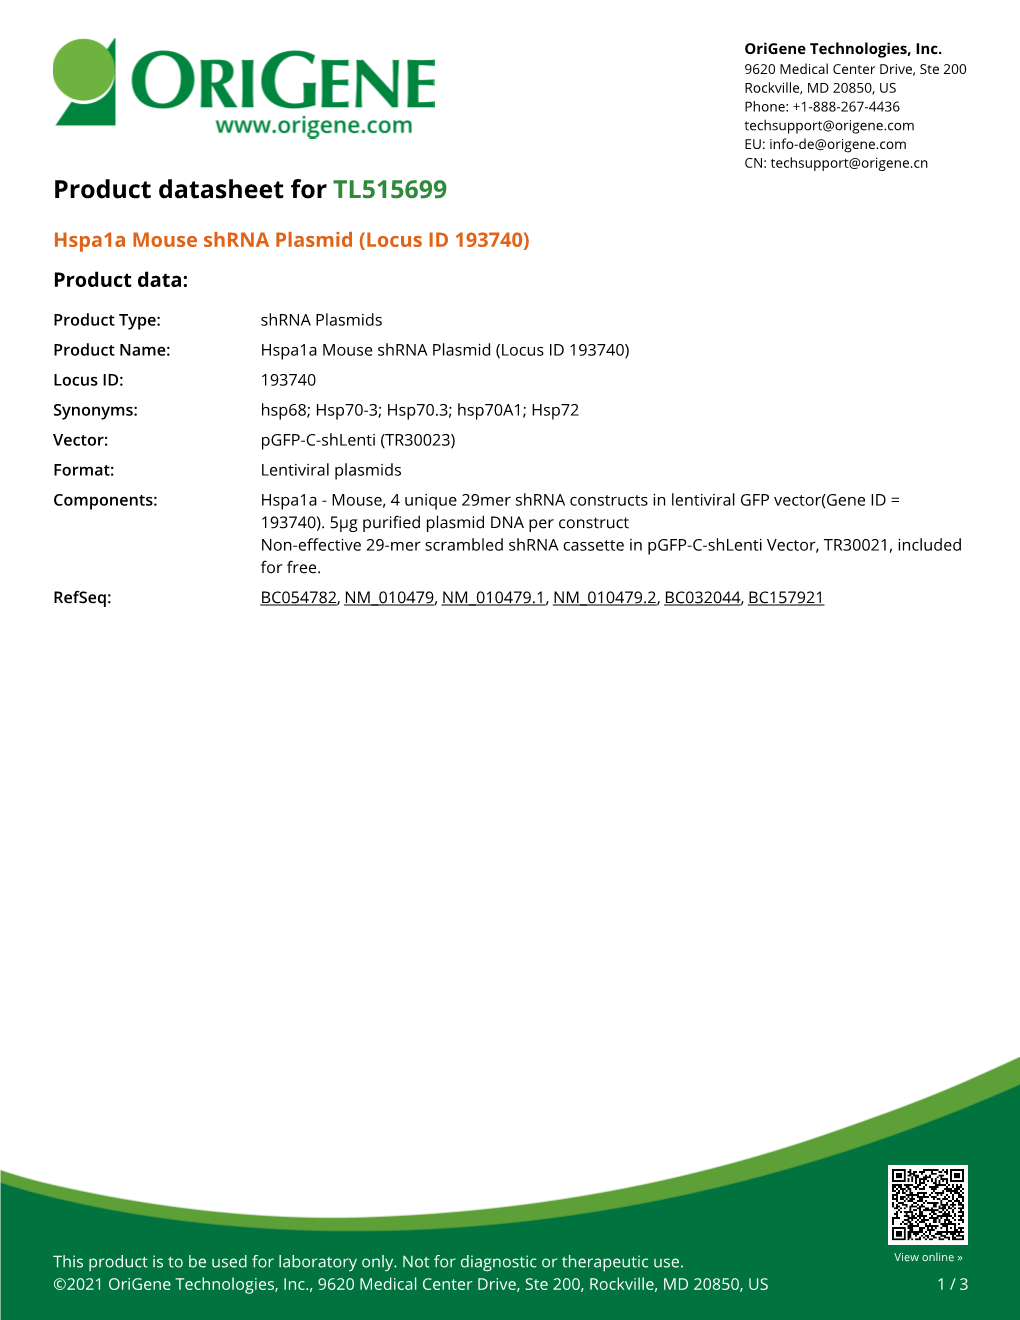 Hspa1a Mouse Shrna Plasmid (Locus ID 193740) Product Data